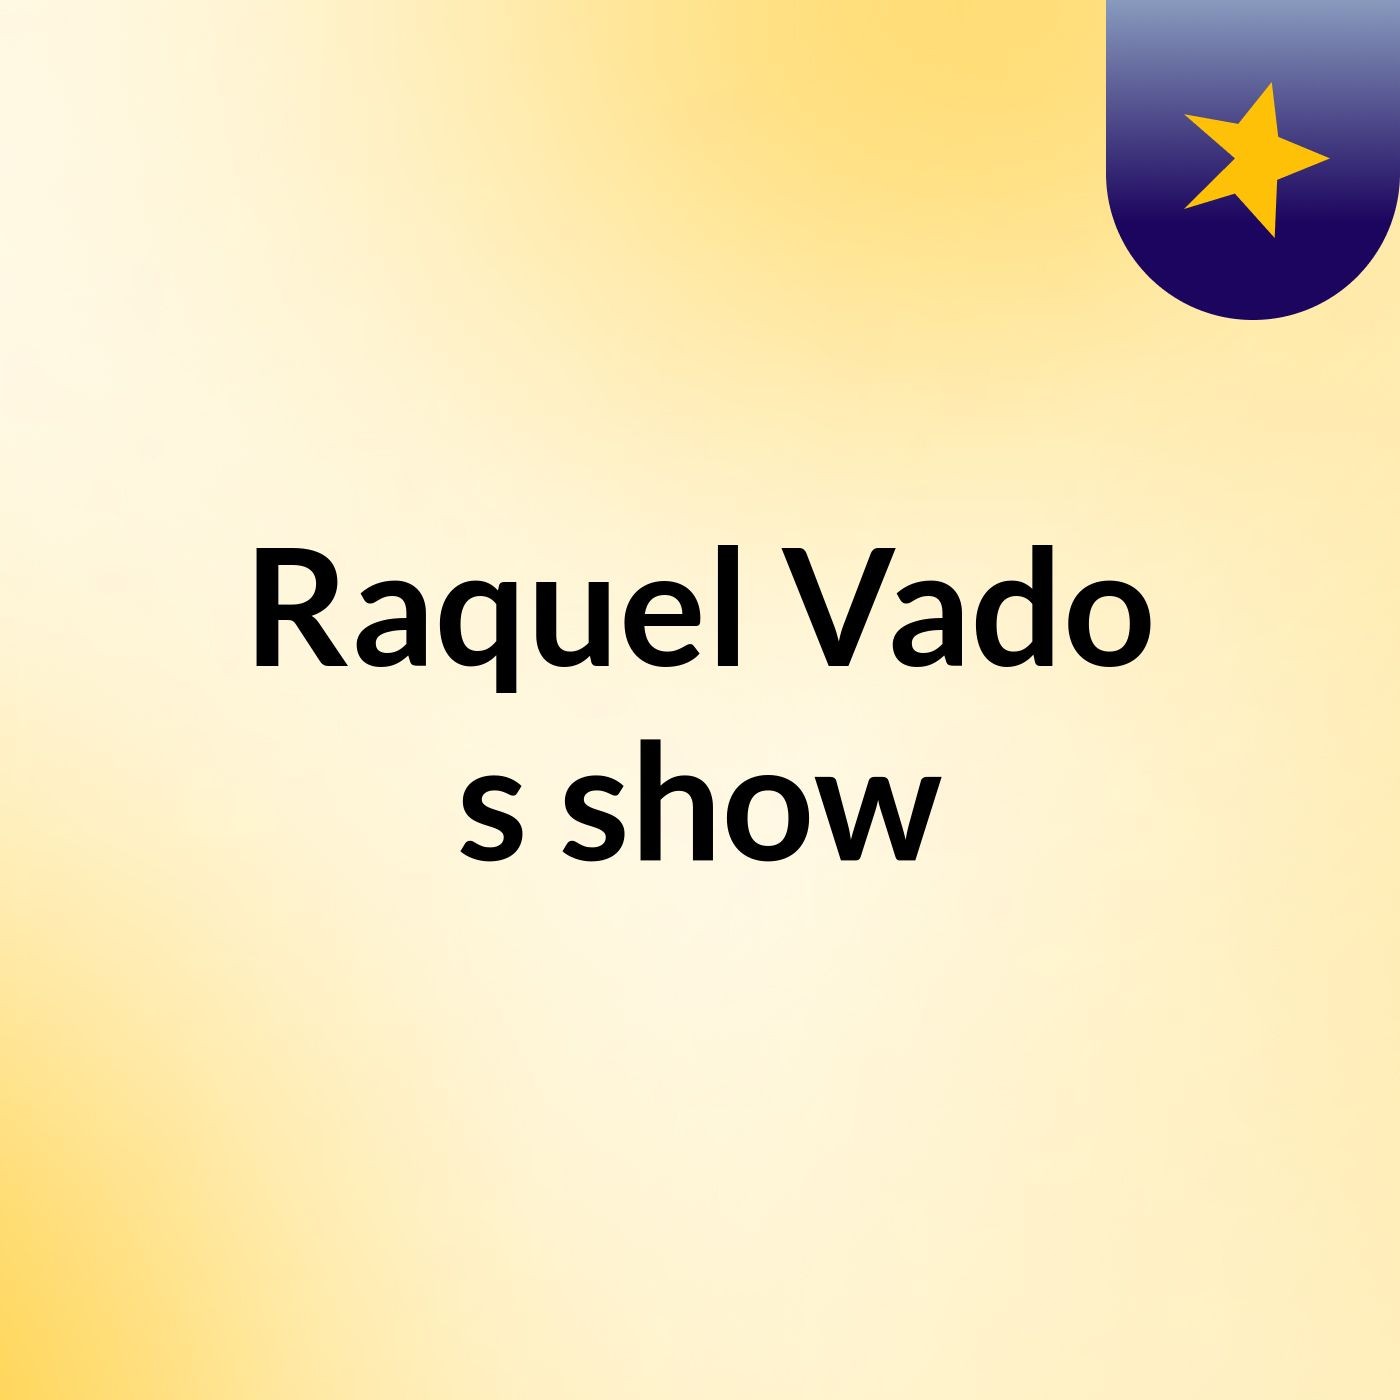 Raquel Vado's show